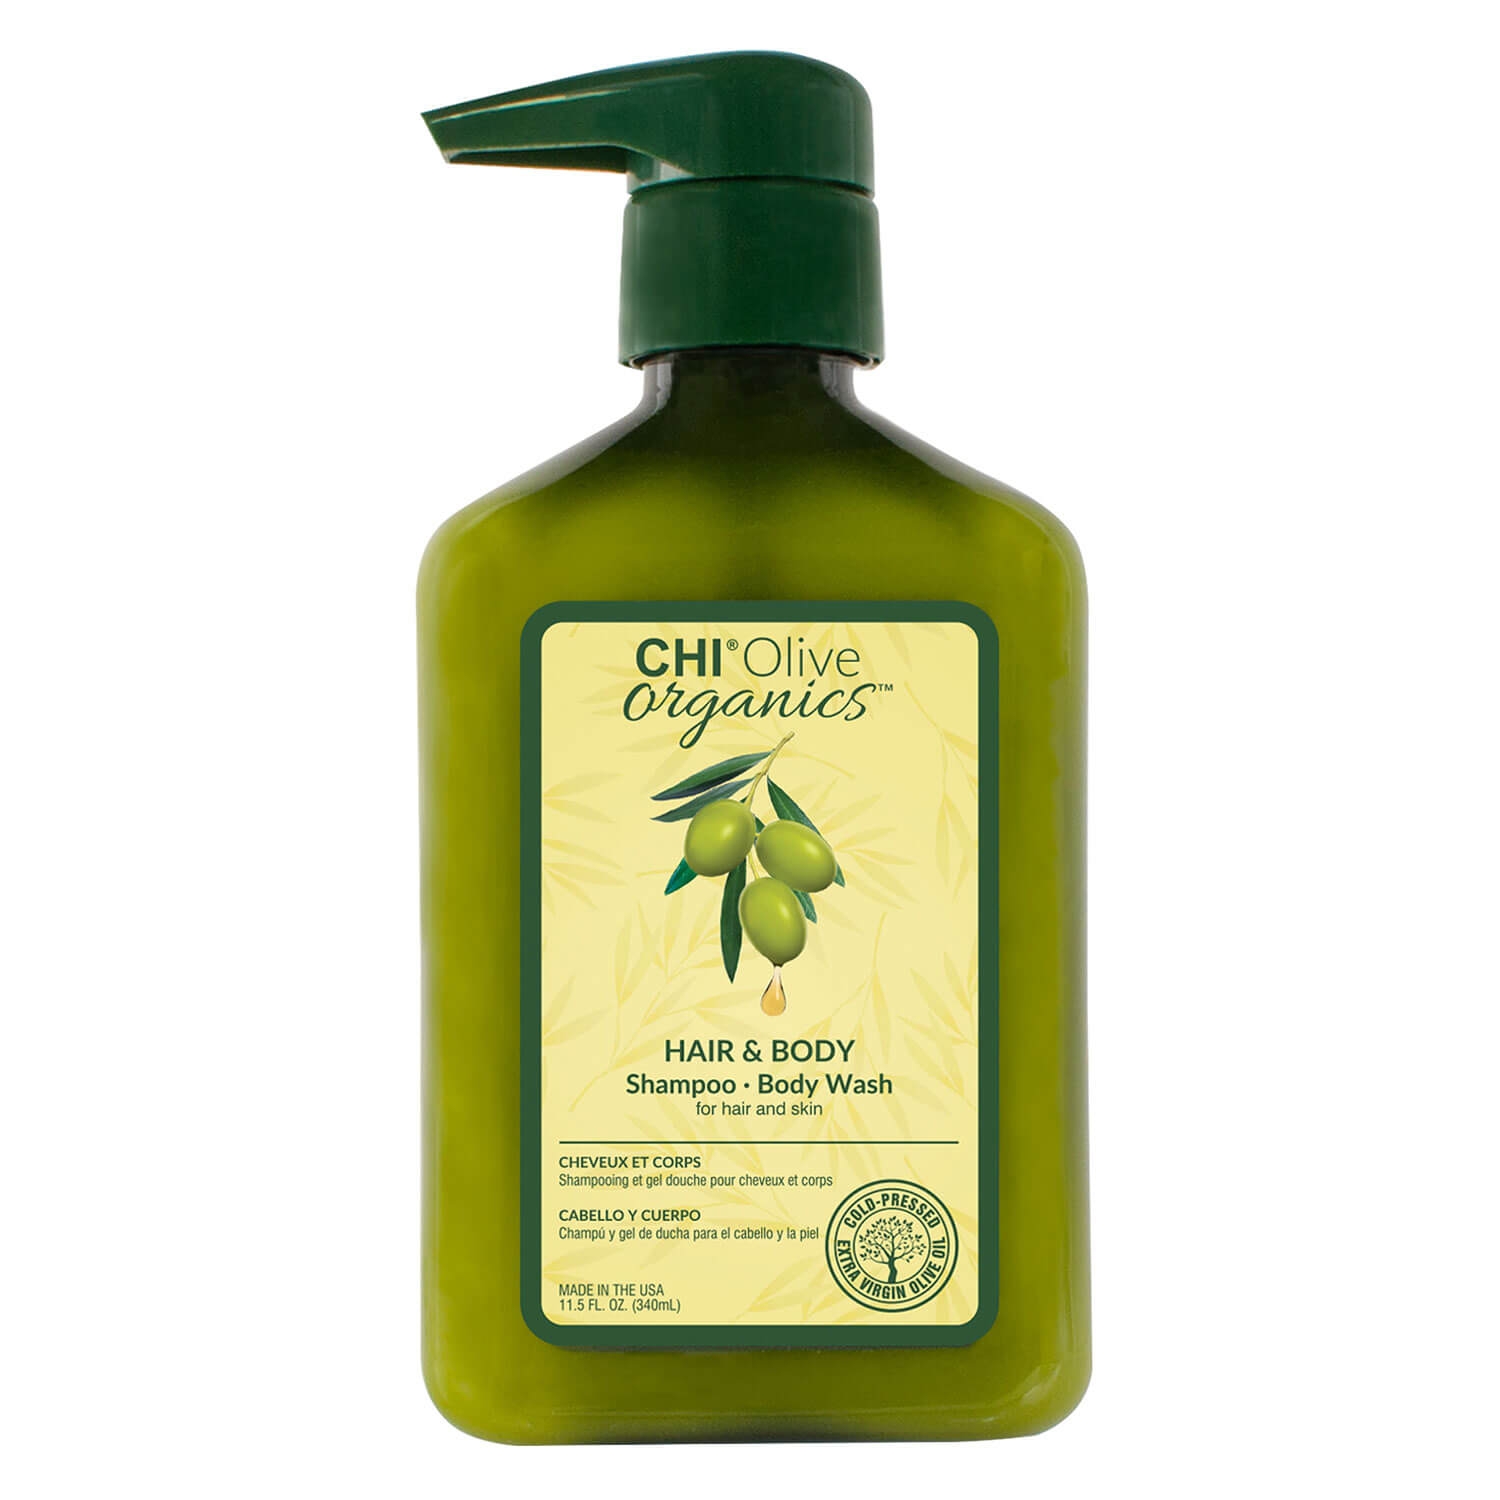 Product image from CHI Olive Organics - Hair & Body Shampoo